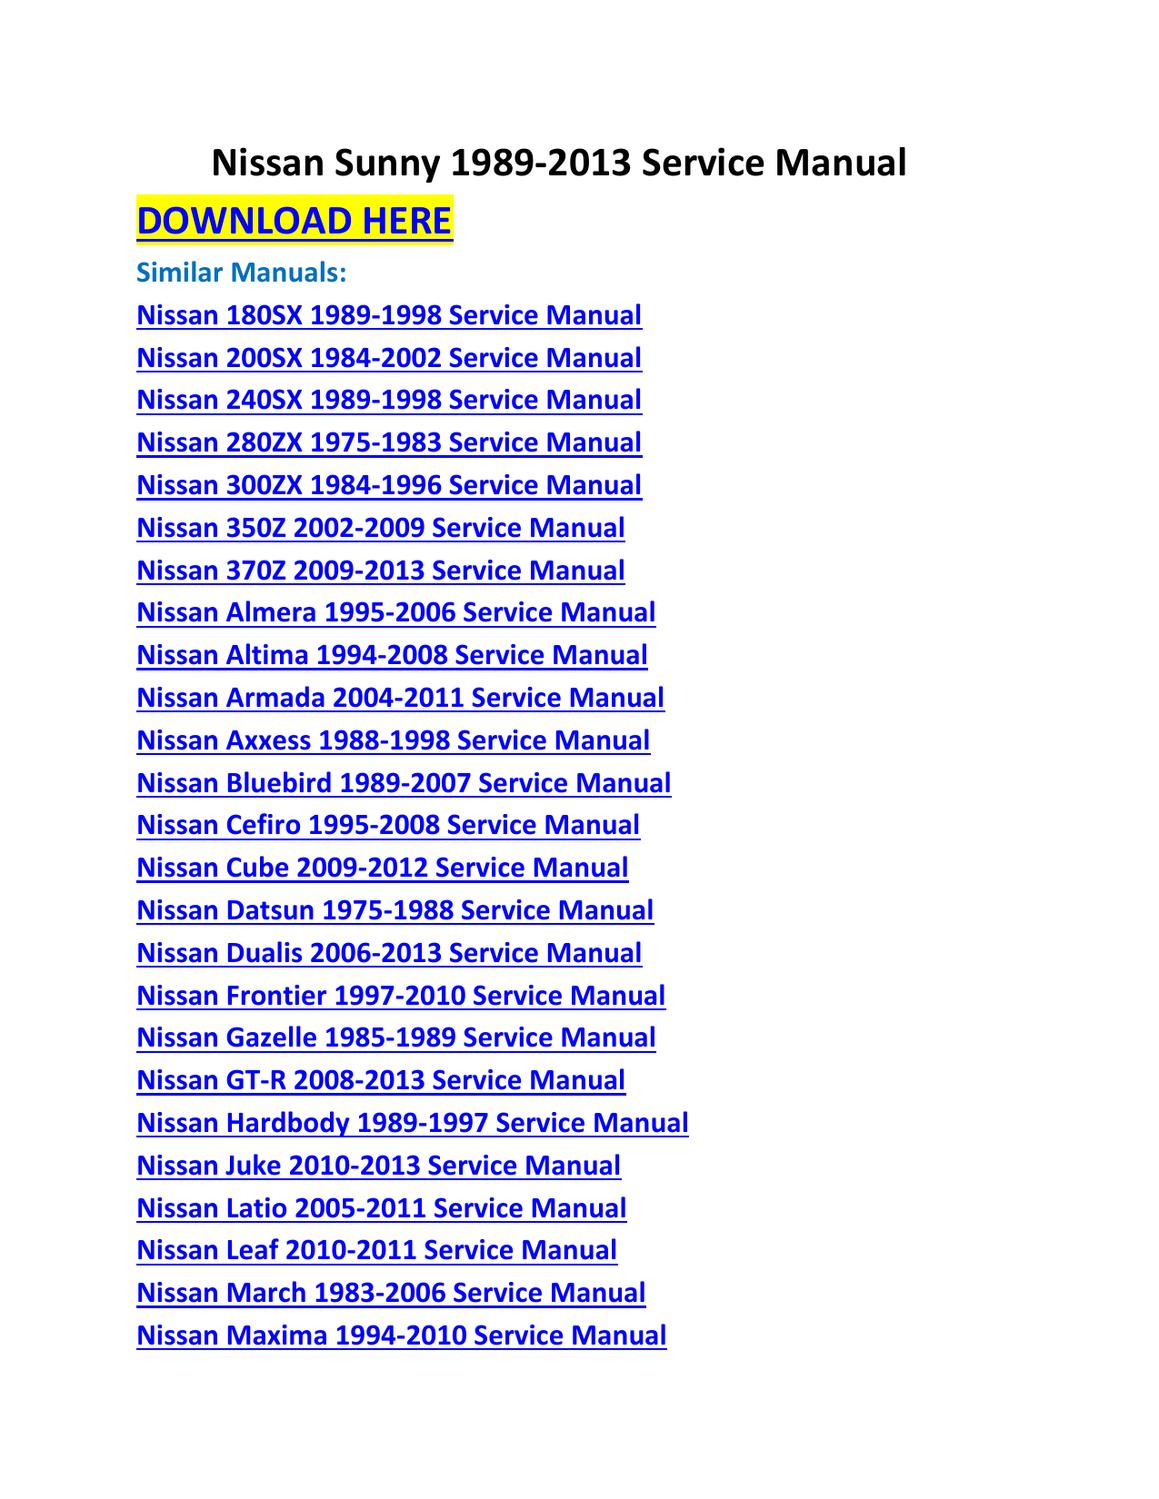 1998 nissan pathfinder service manual free download